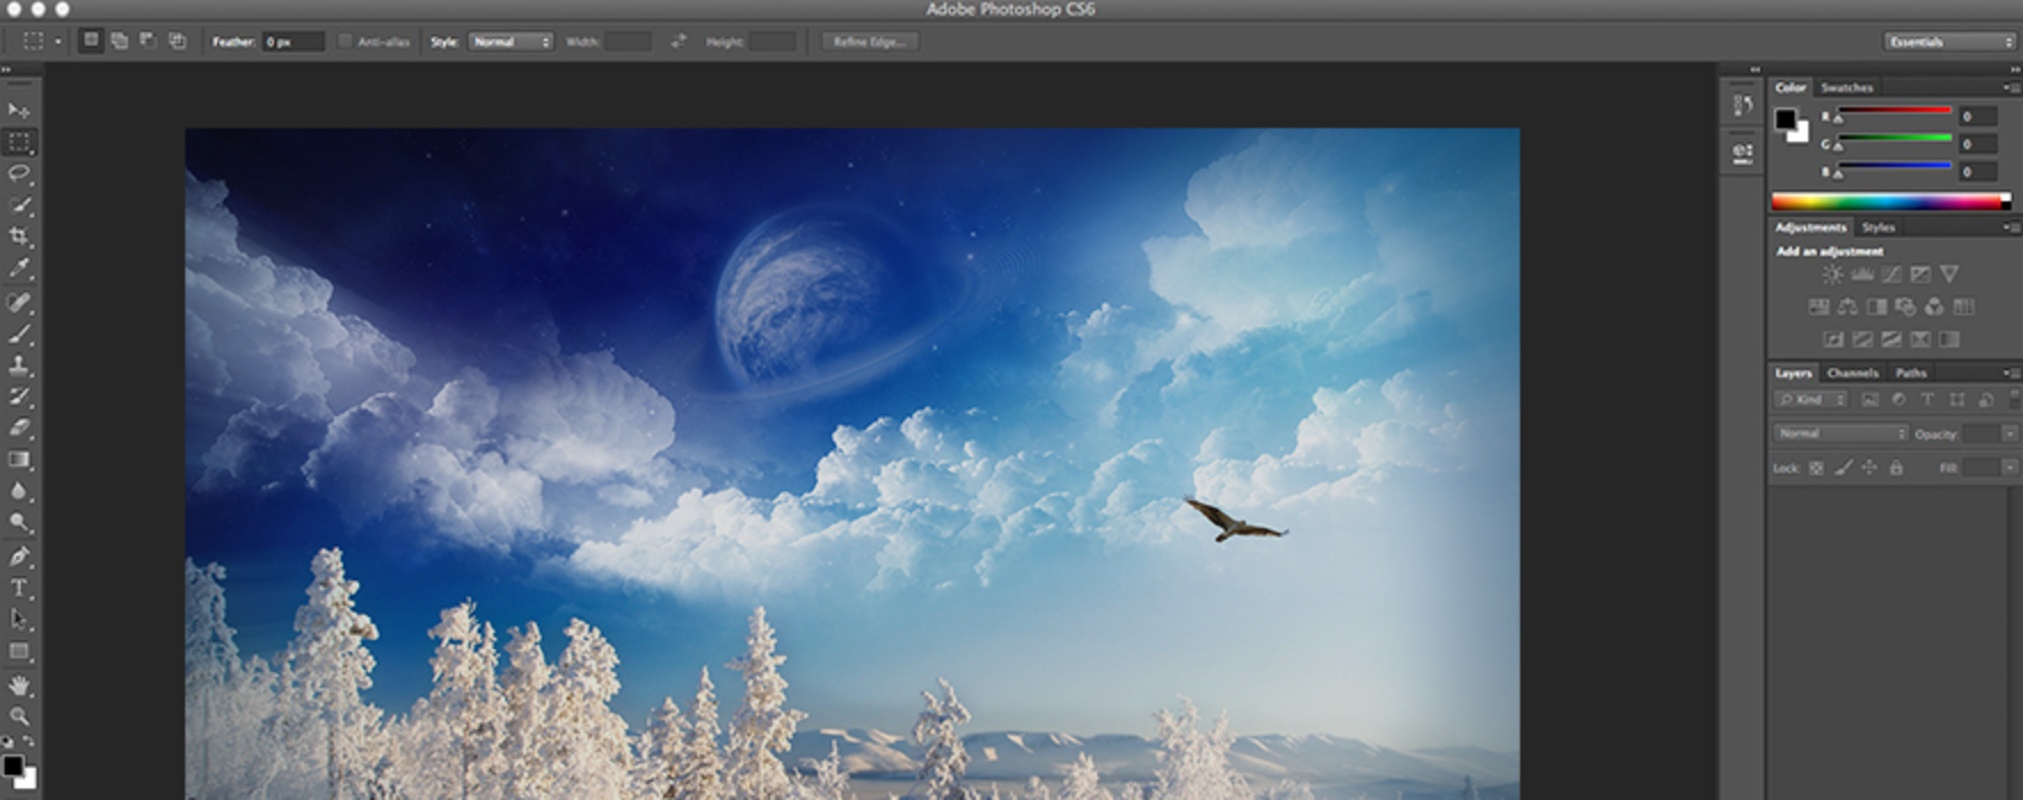 Adobe Photoshop CS6 Beta feature